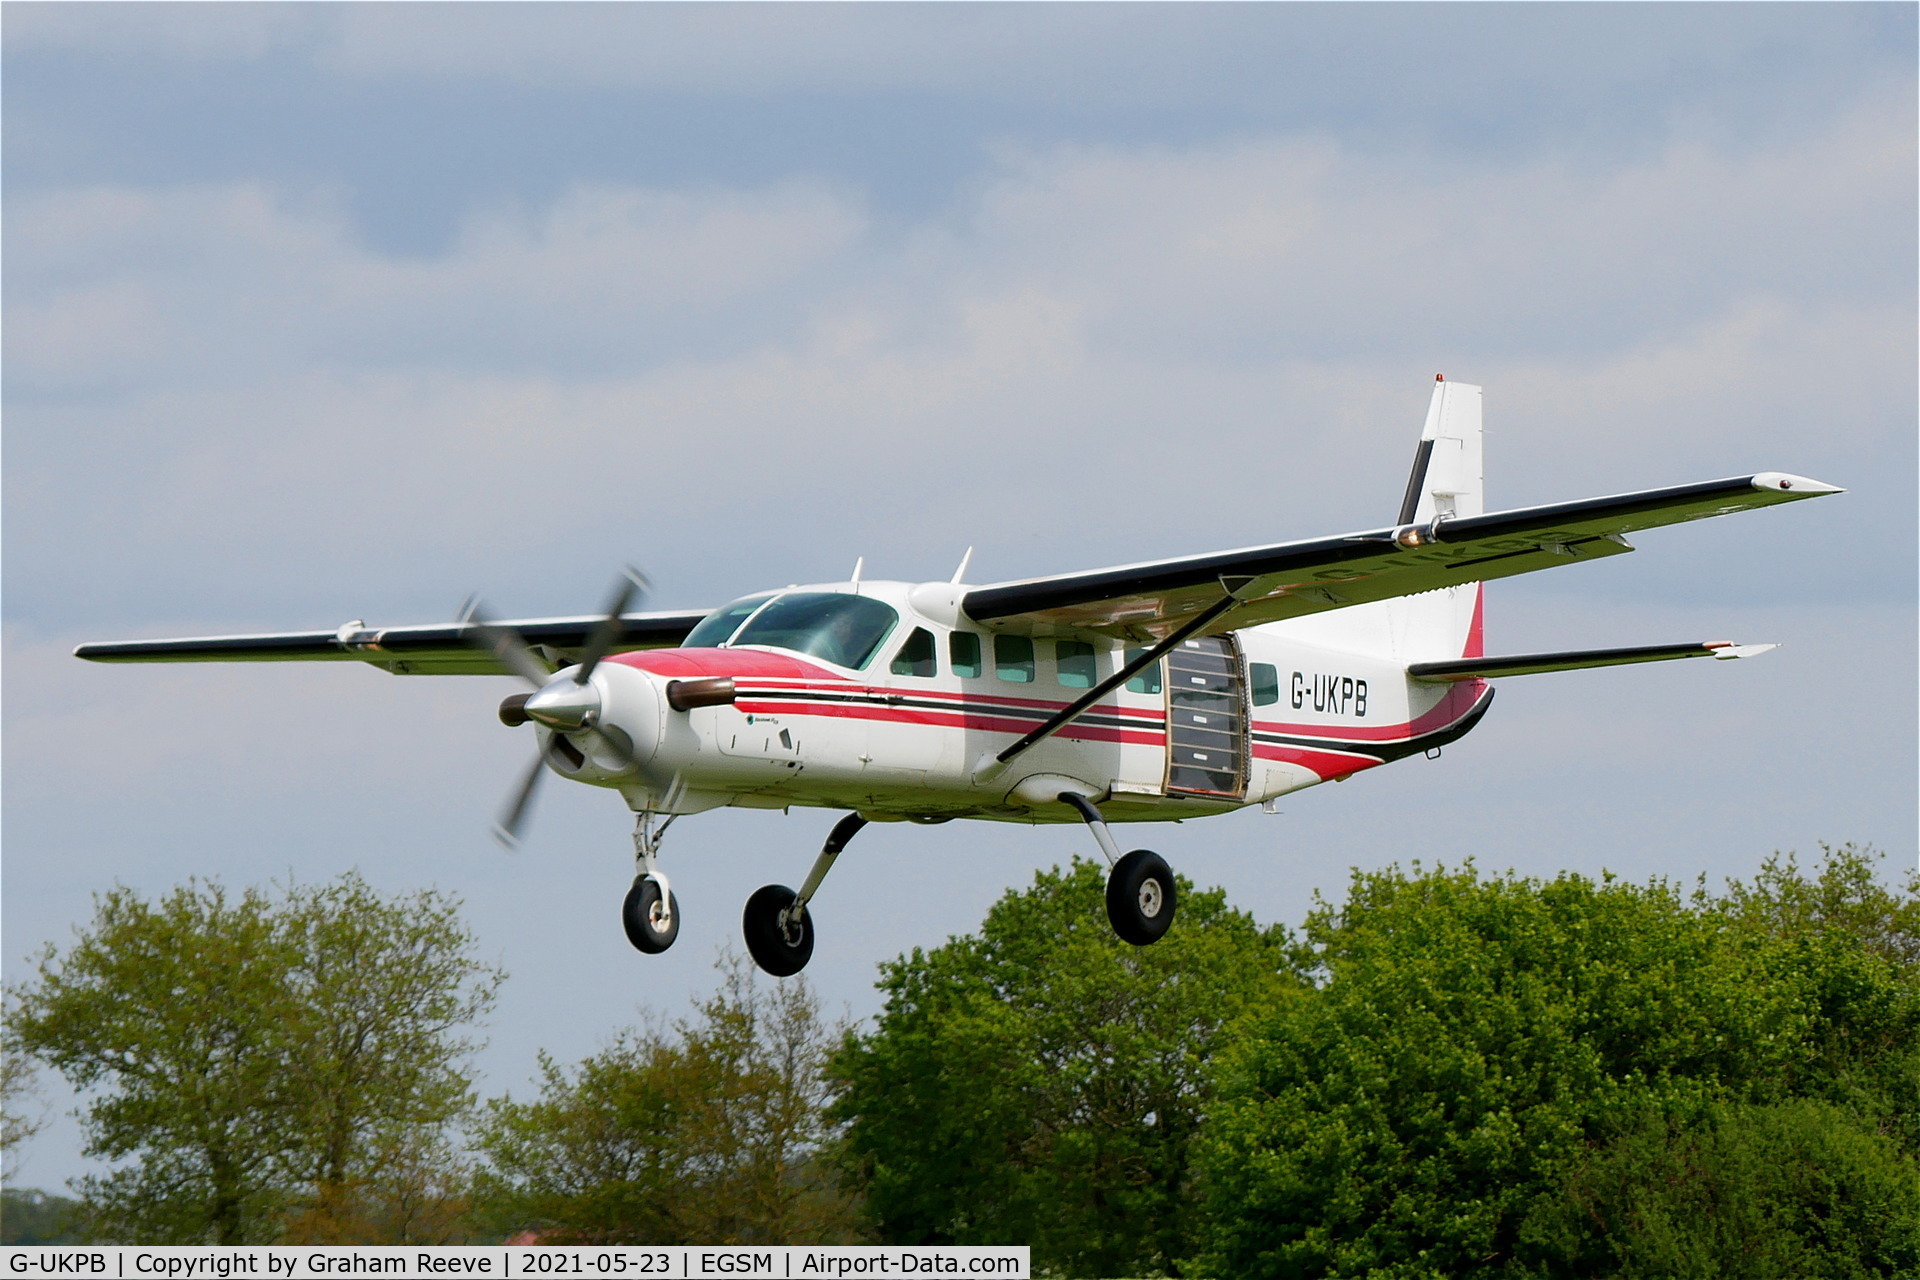 G-UKPB, 1997 Cessna 208B Grand Caravan C/N 208B-0629, Landing at Beccles.